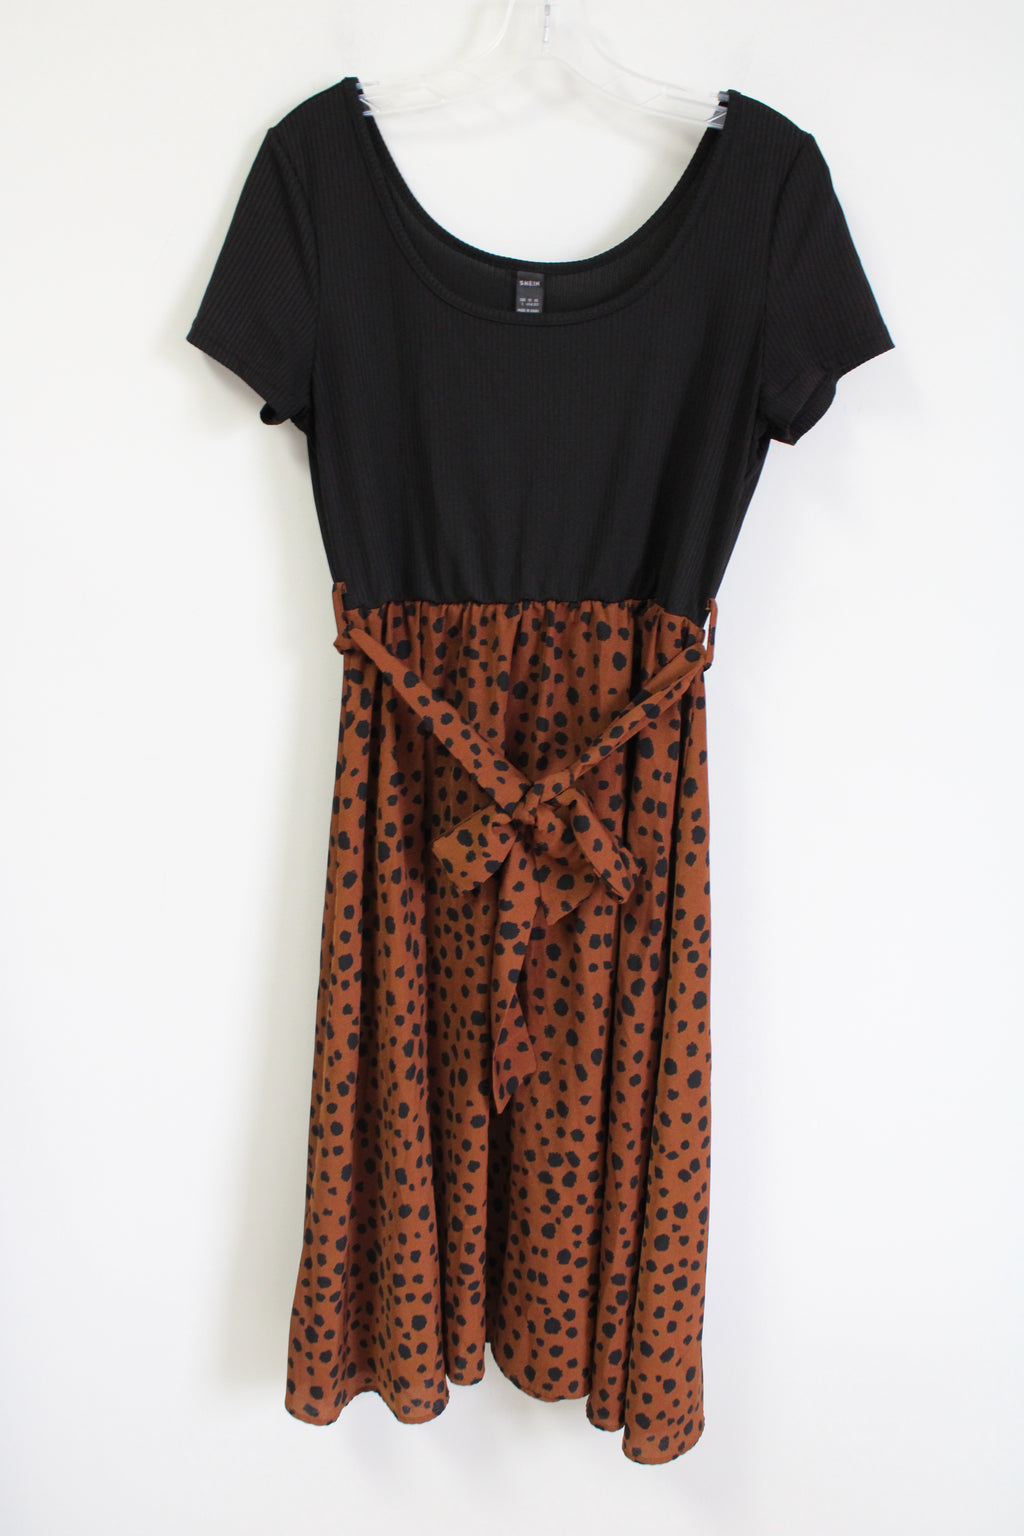 Shein Black Brown Cheetah Printed Dress | L